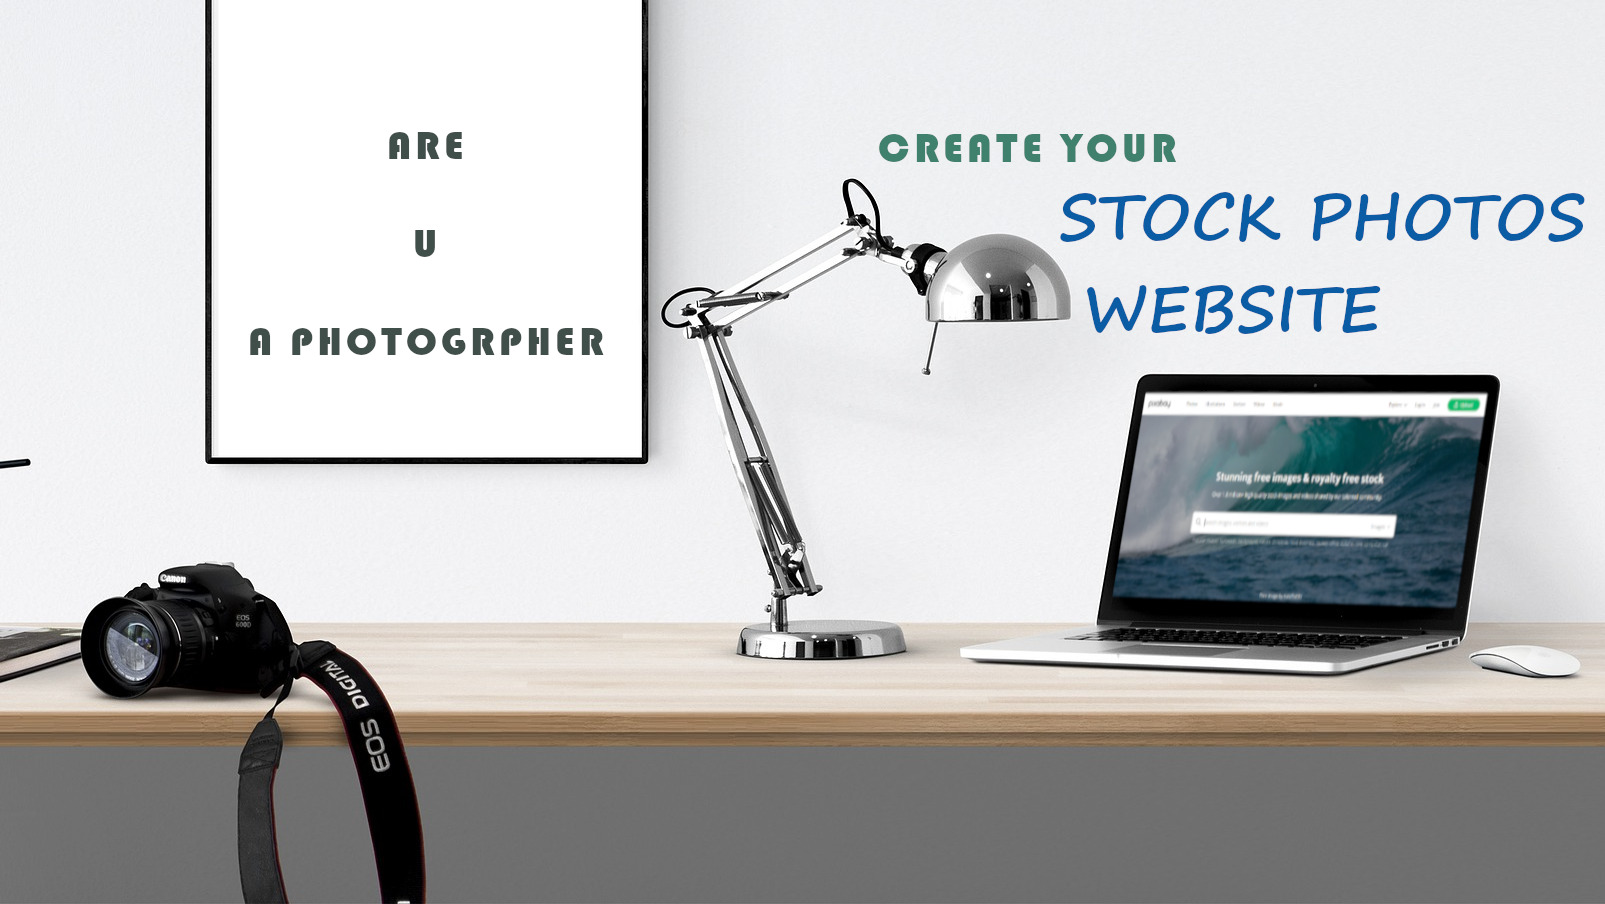 Create stock photos website